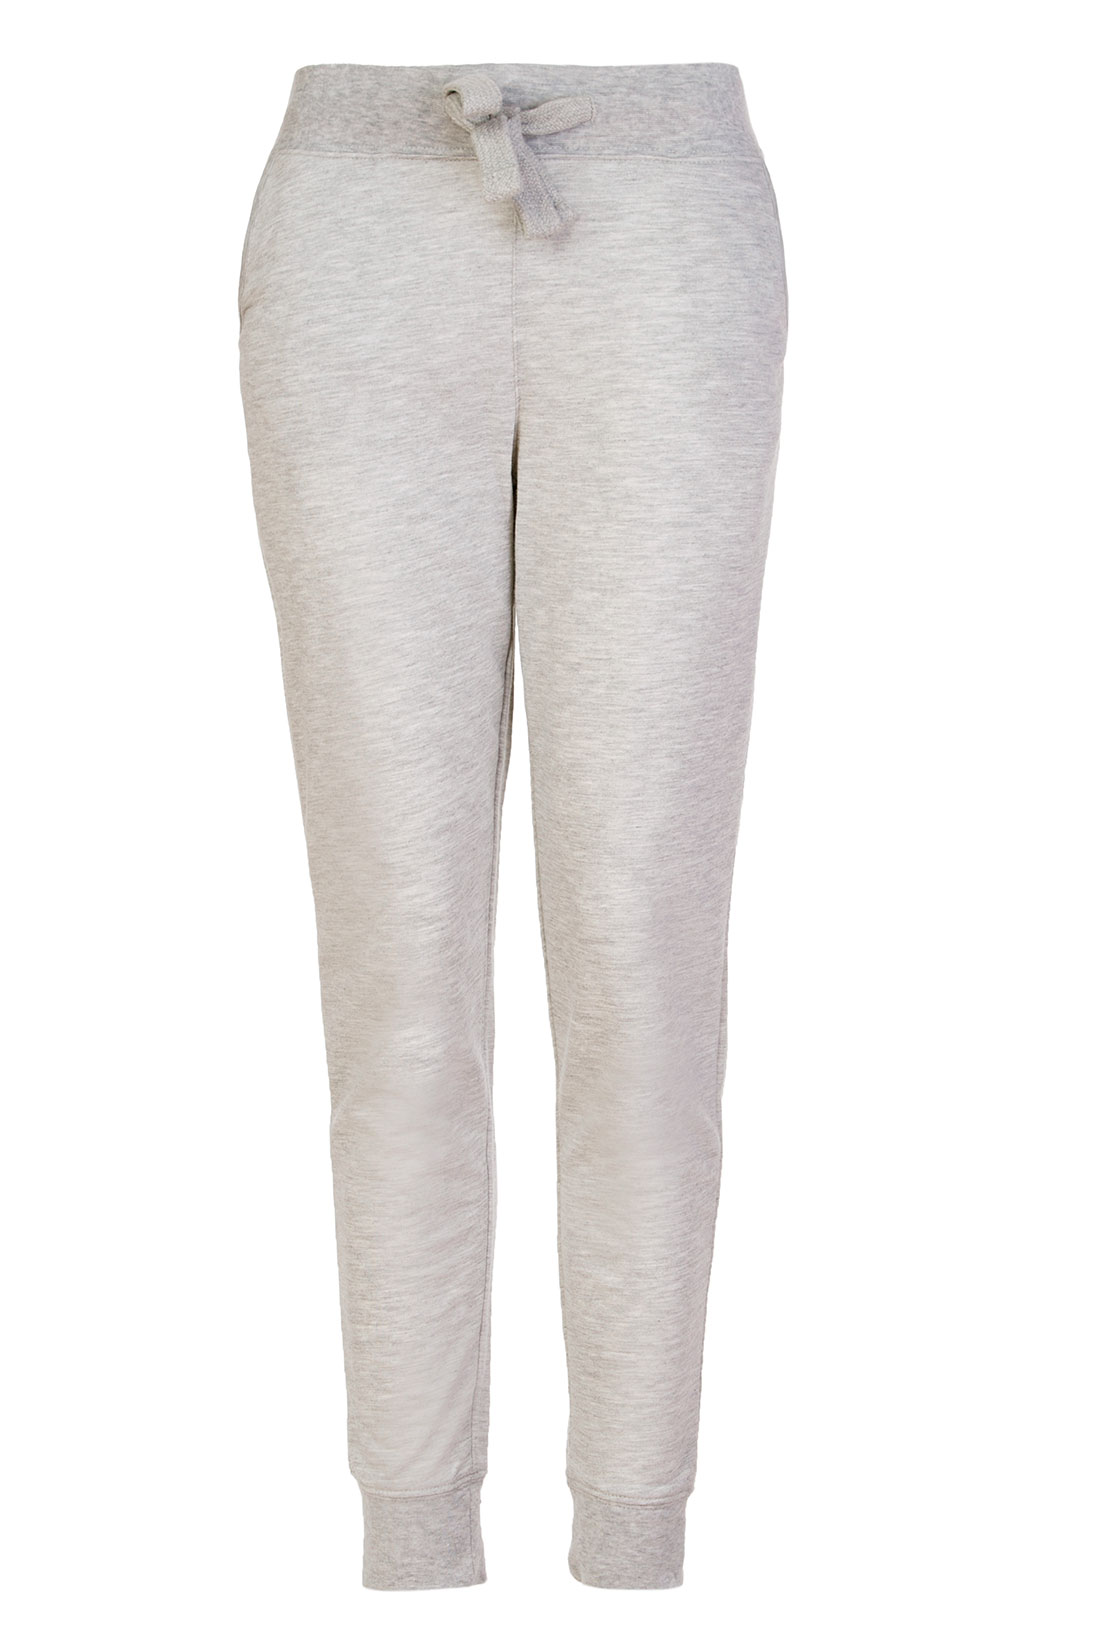 Спортивные брюки с манжетами (арт. baon B297302), размер XXL, цвет silver melange#серый Спортивные брюки с манжетами (арт. baon B297302) - фото 4